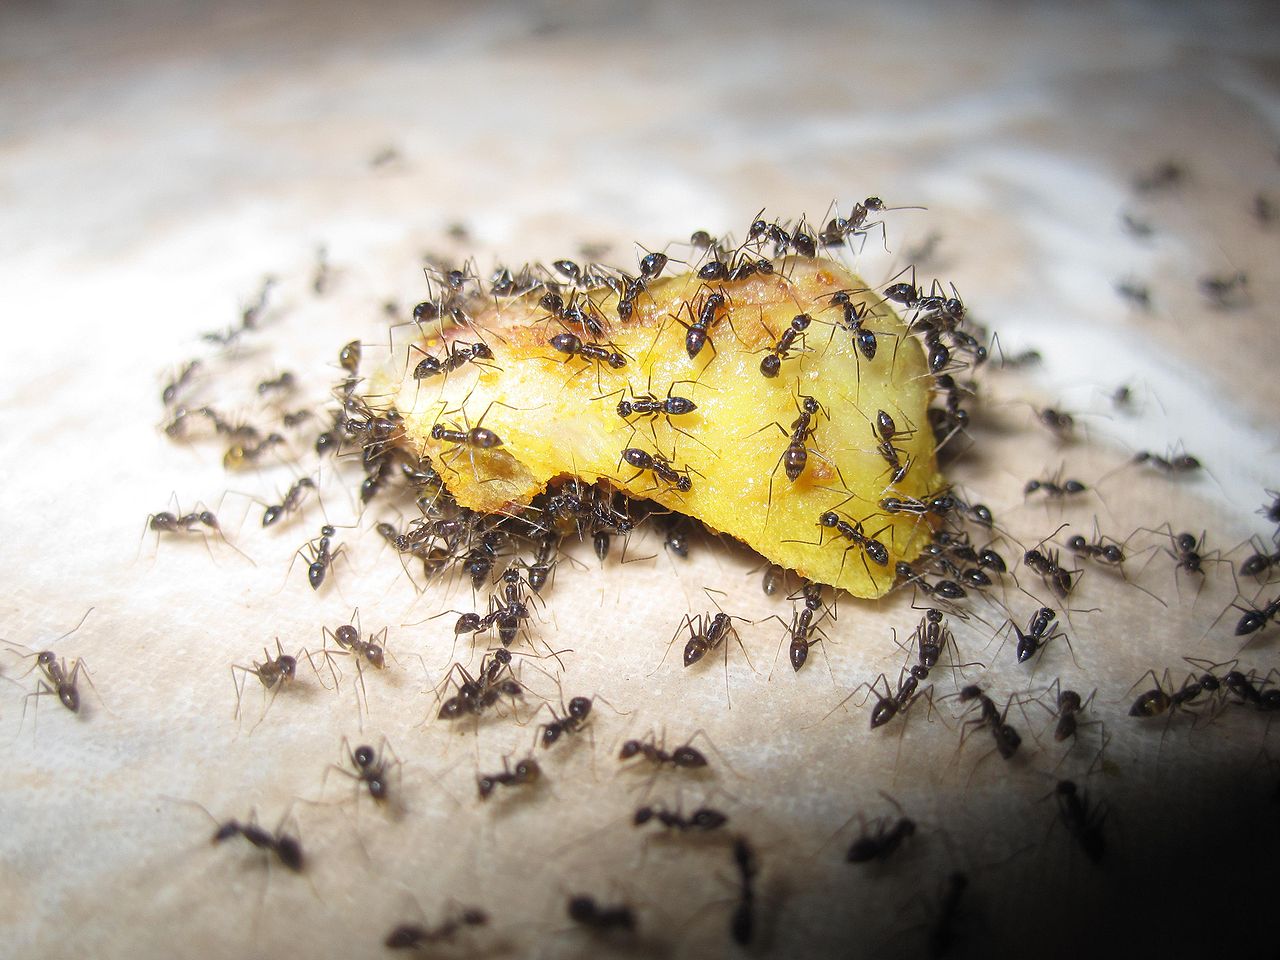 Ants eating fruit